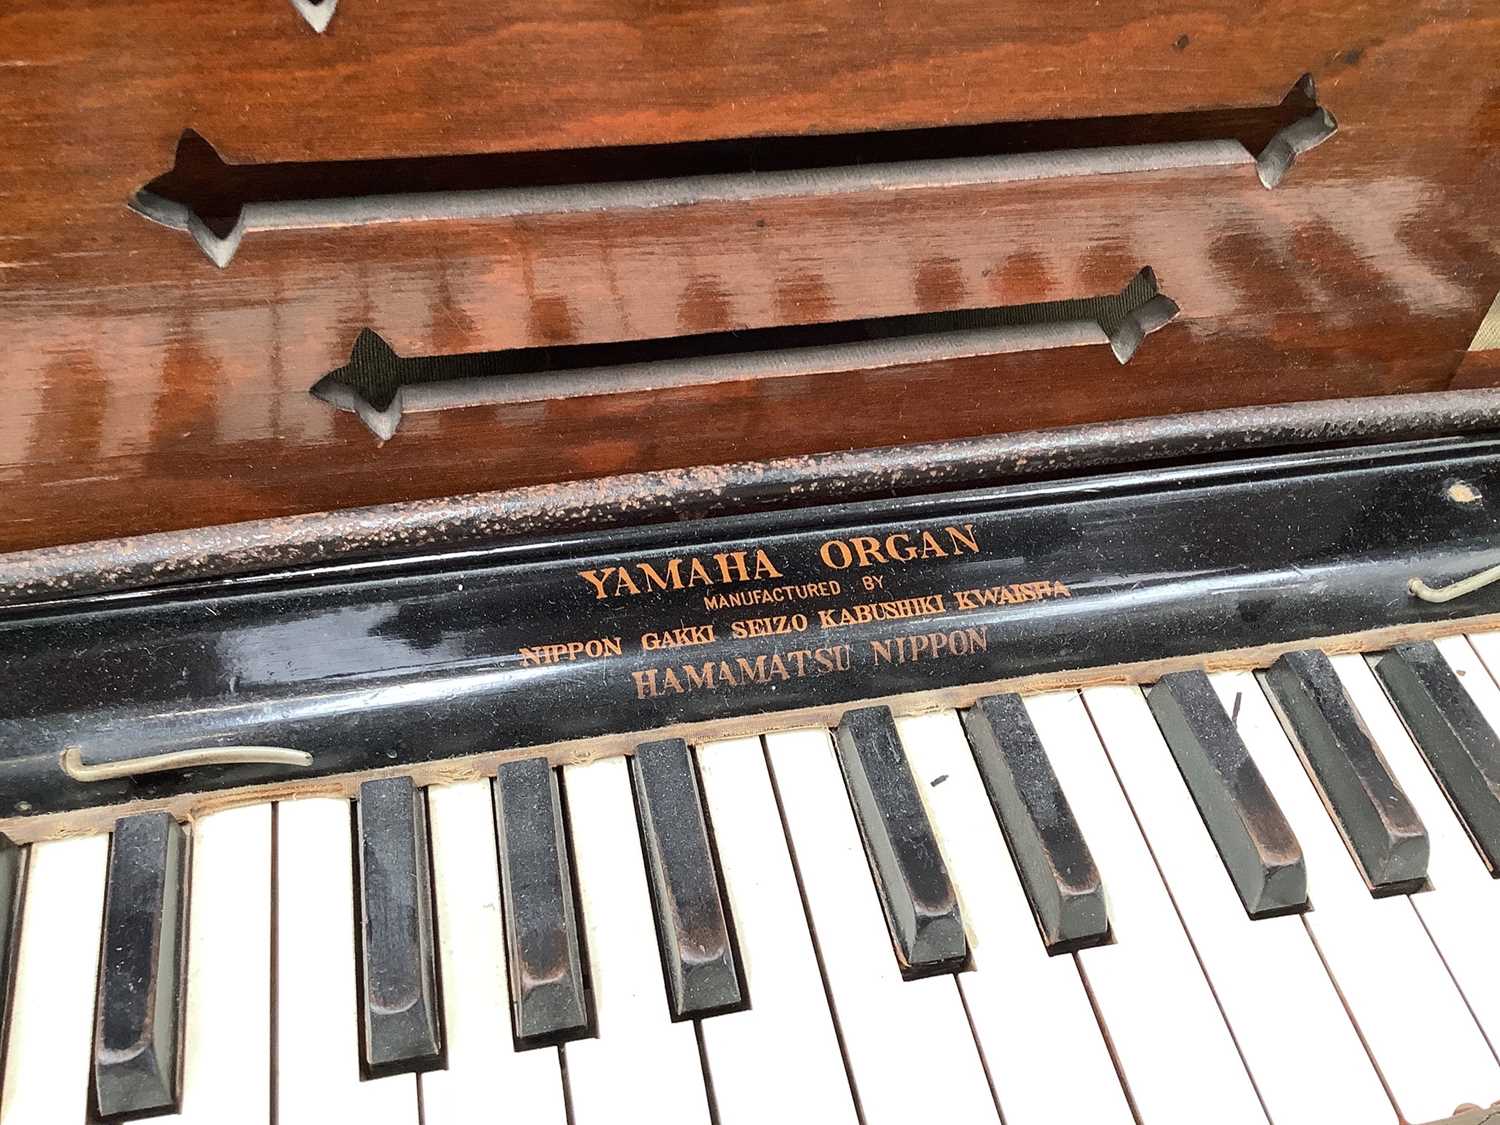 Yamaha folding wooden organ - Image 2 of 2